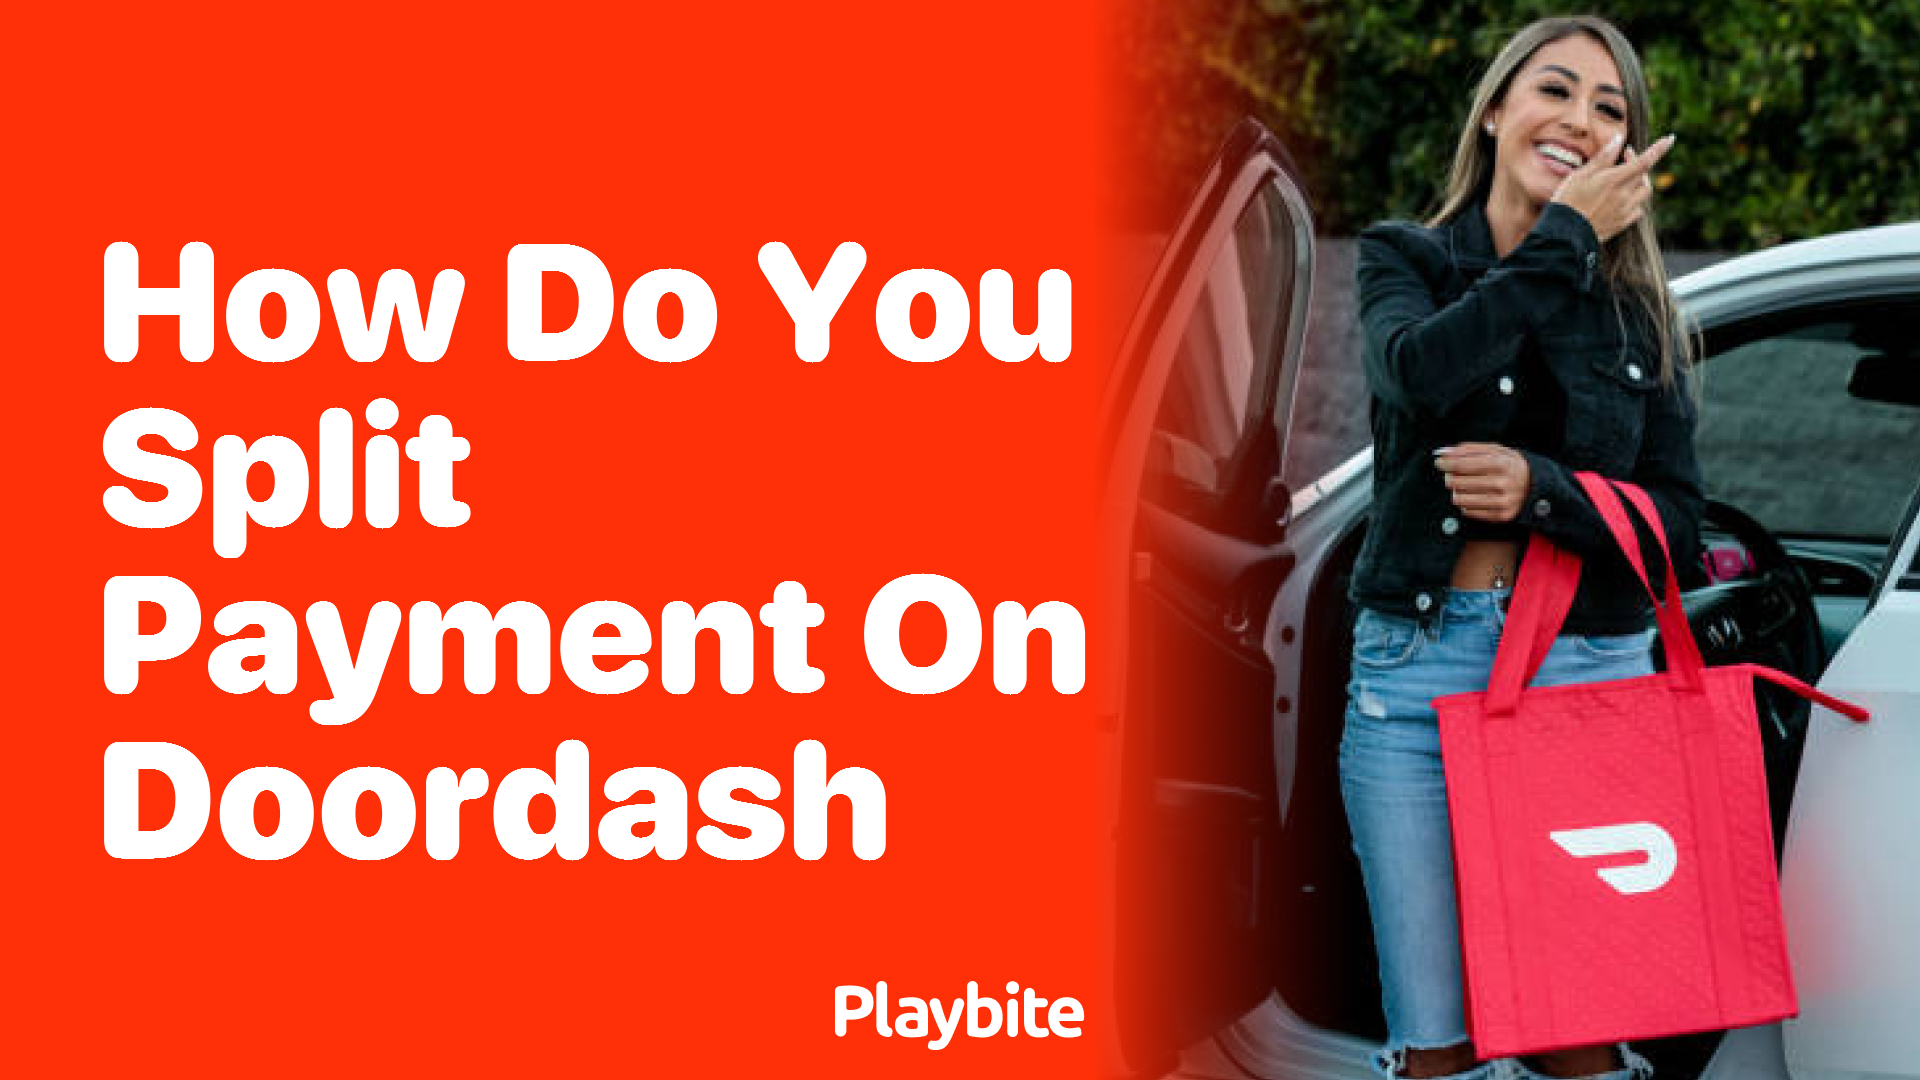 How Do You Split Payment on DoorDash? Let’s Find Out!